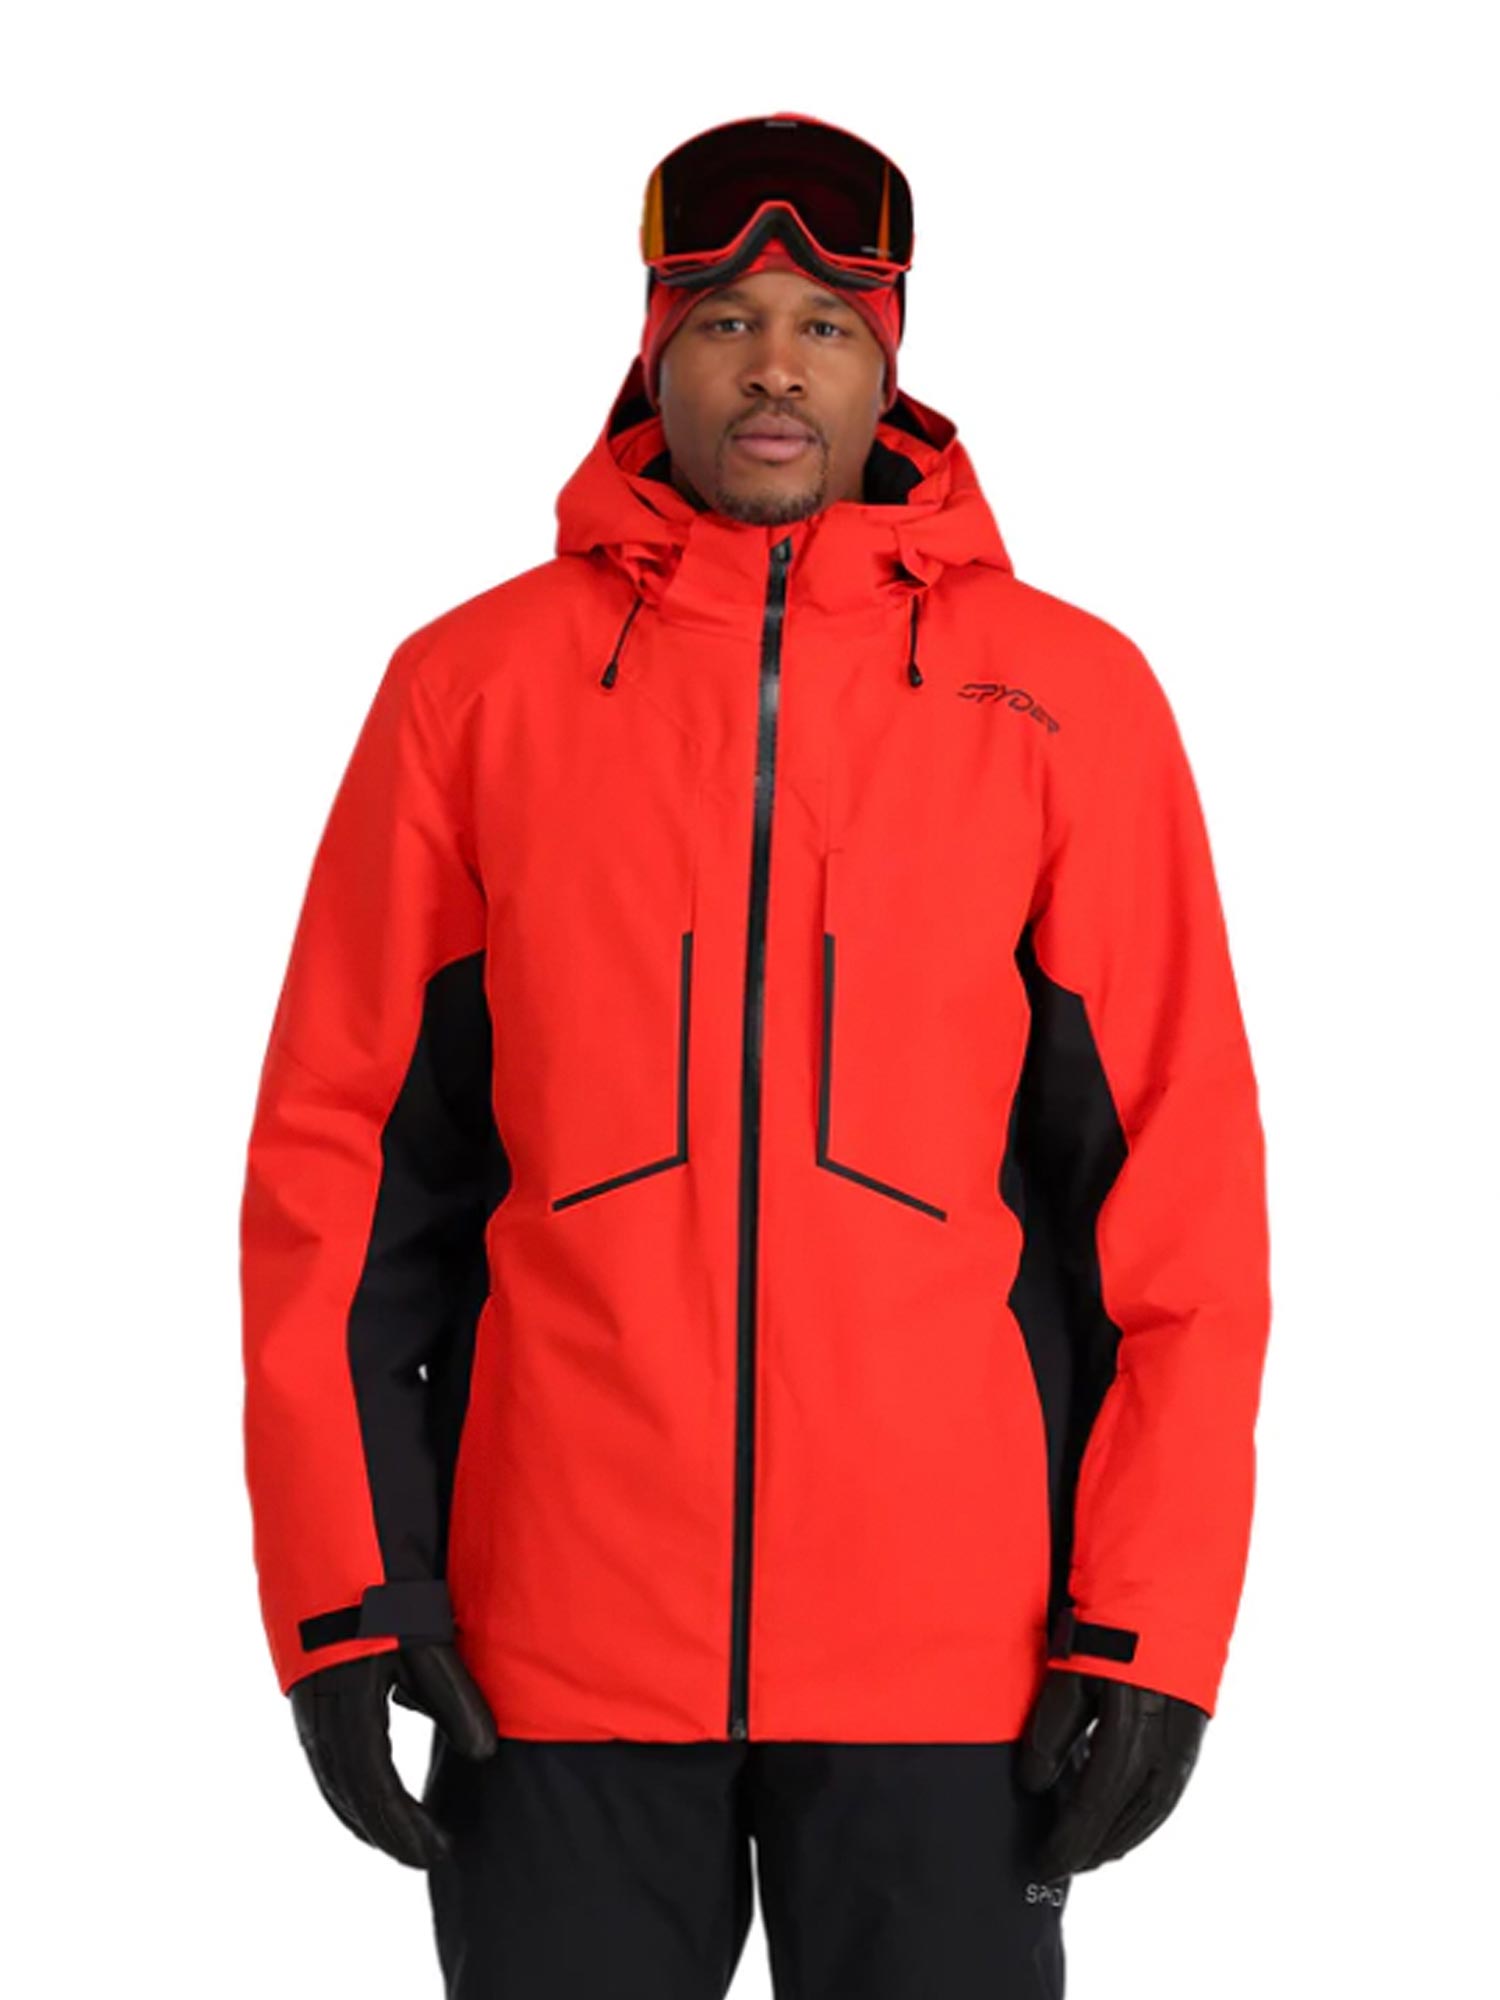 men's Spyder ski jacket, red with black accents